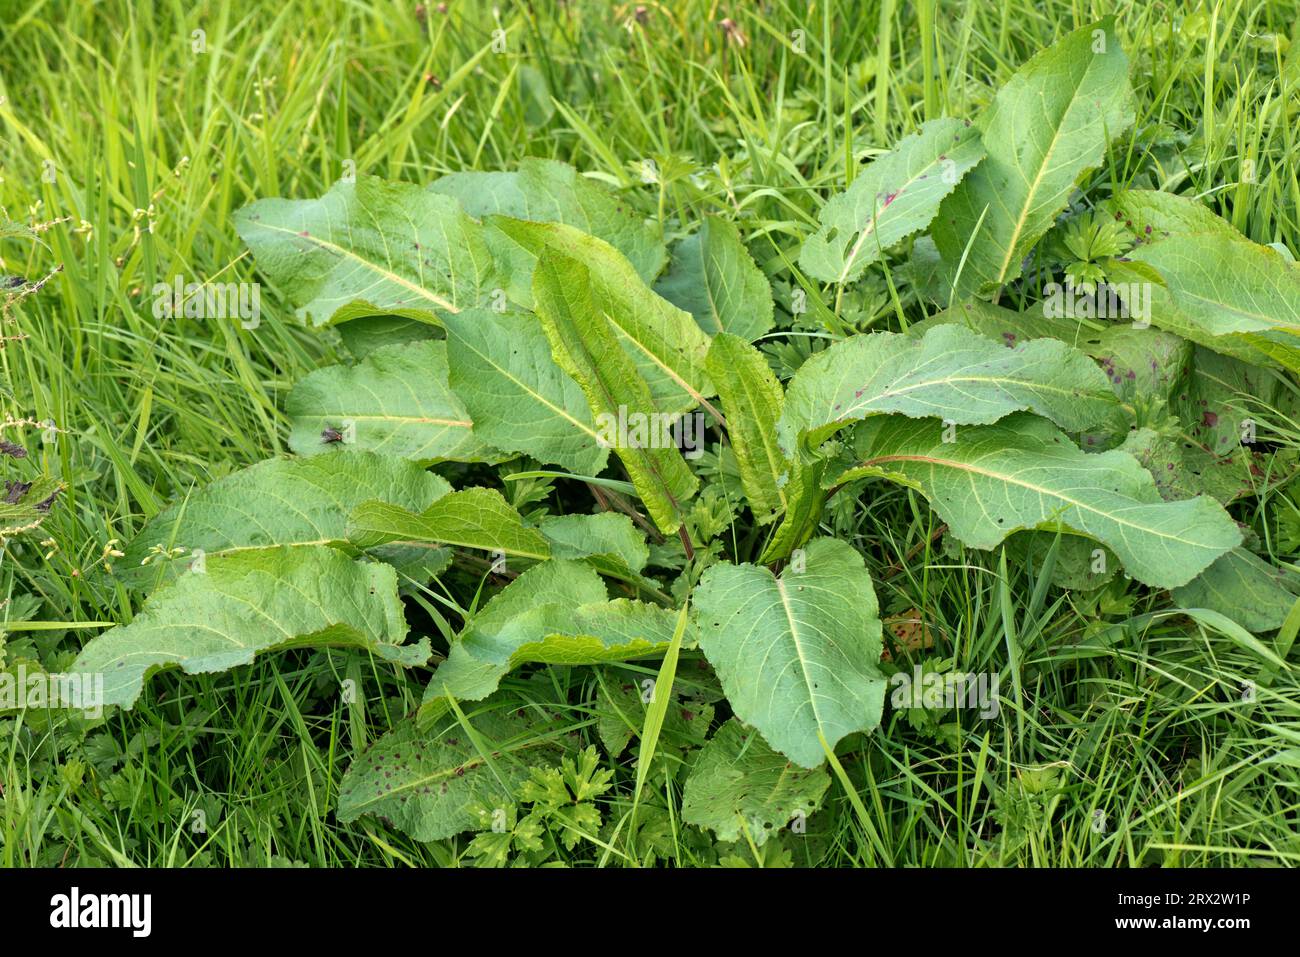 Broad-leaved dock (Rumex obtusifolius) leaves of bold perennial herbaceaous plant weed growing in rough pasture, Berkshire, August Stock Photo